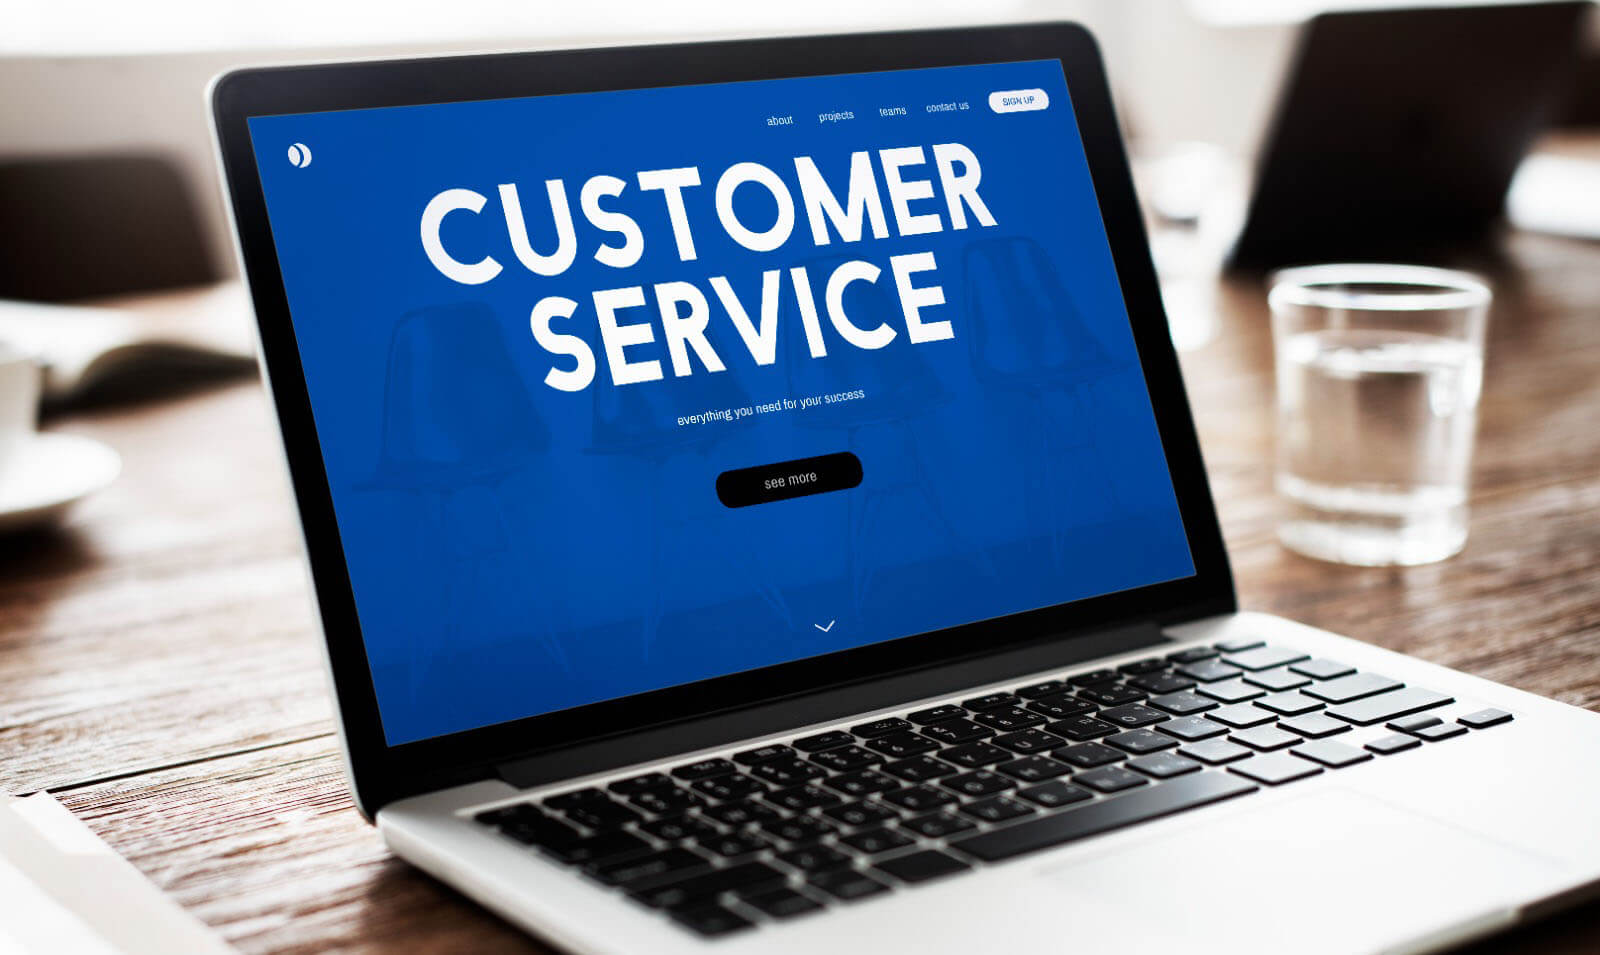 customer care webpage interface